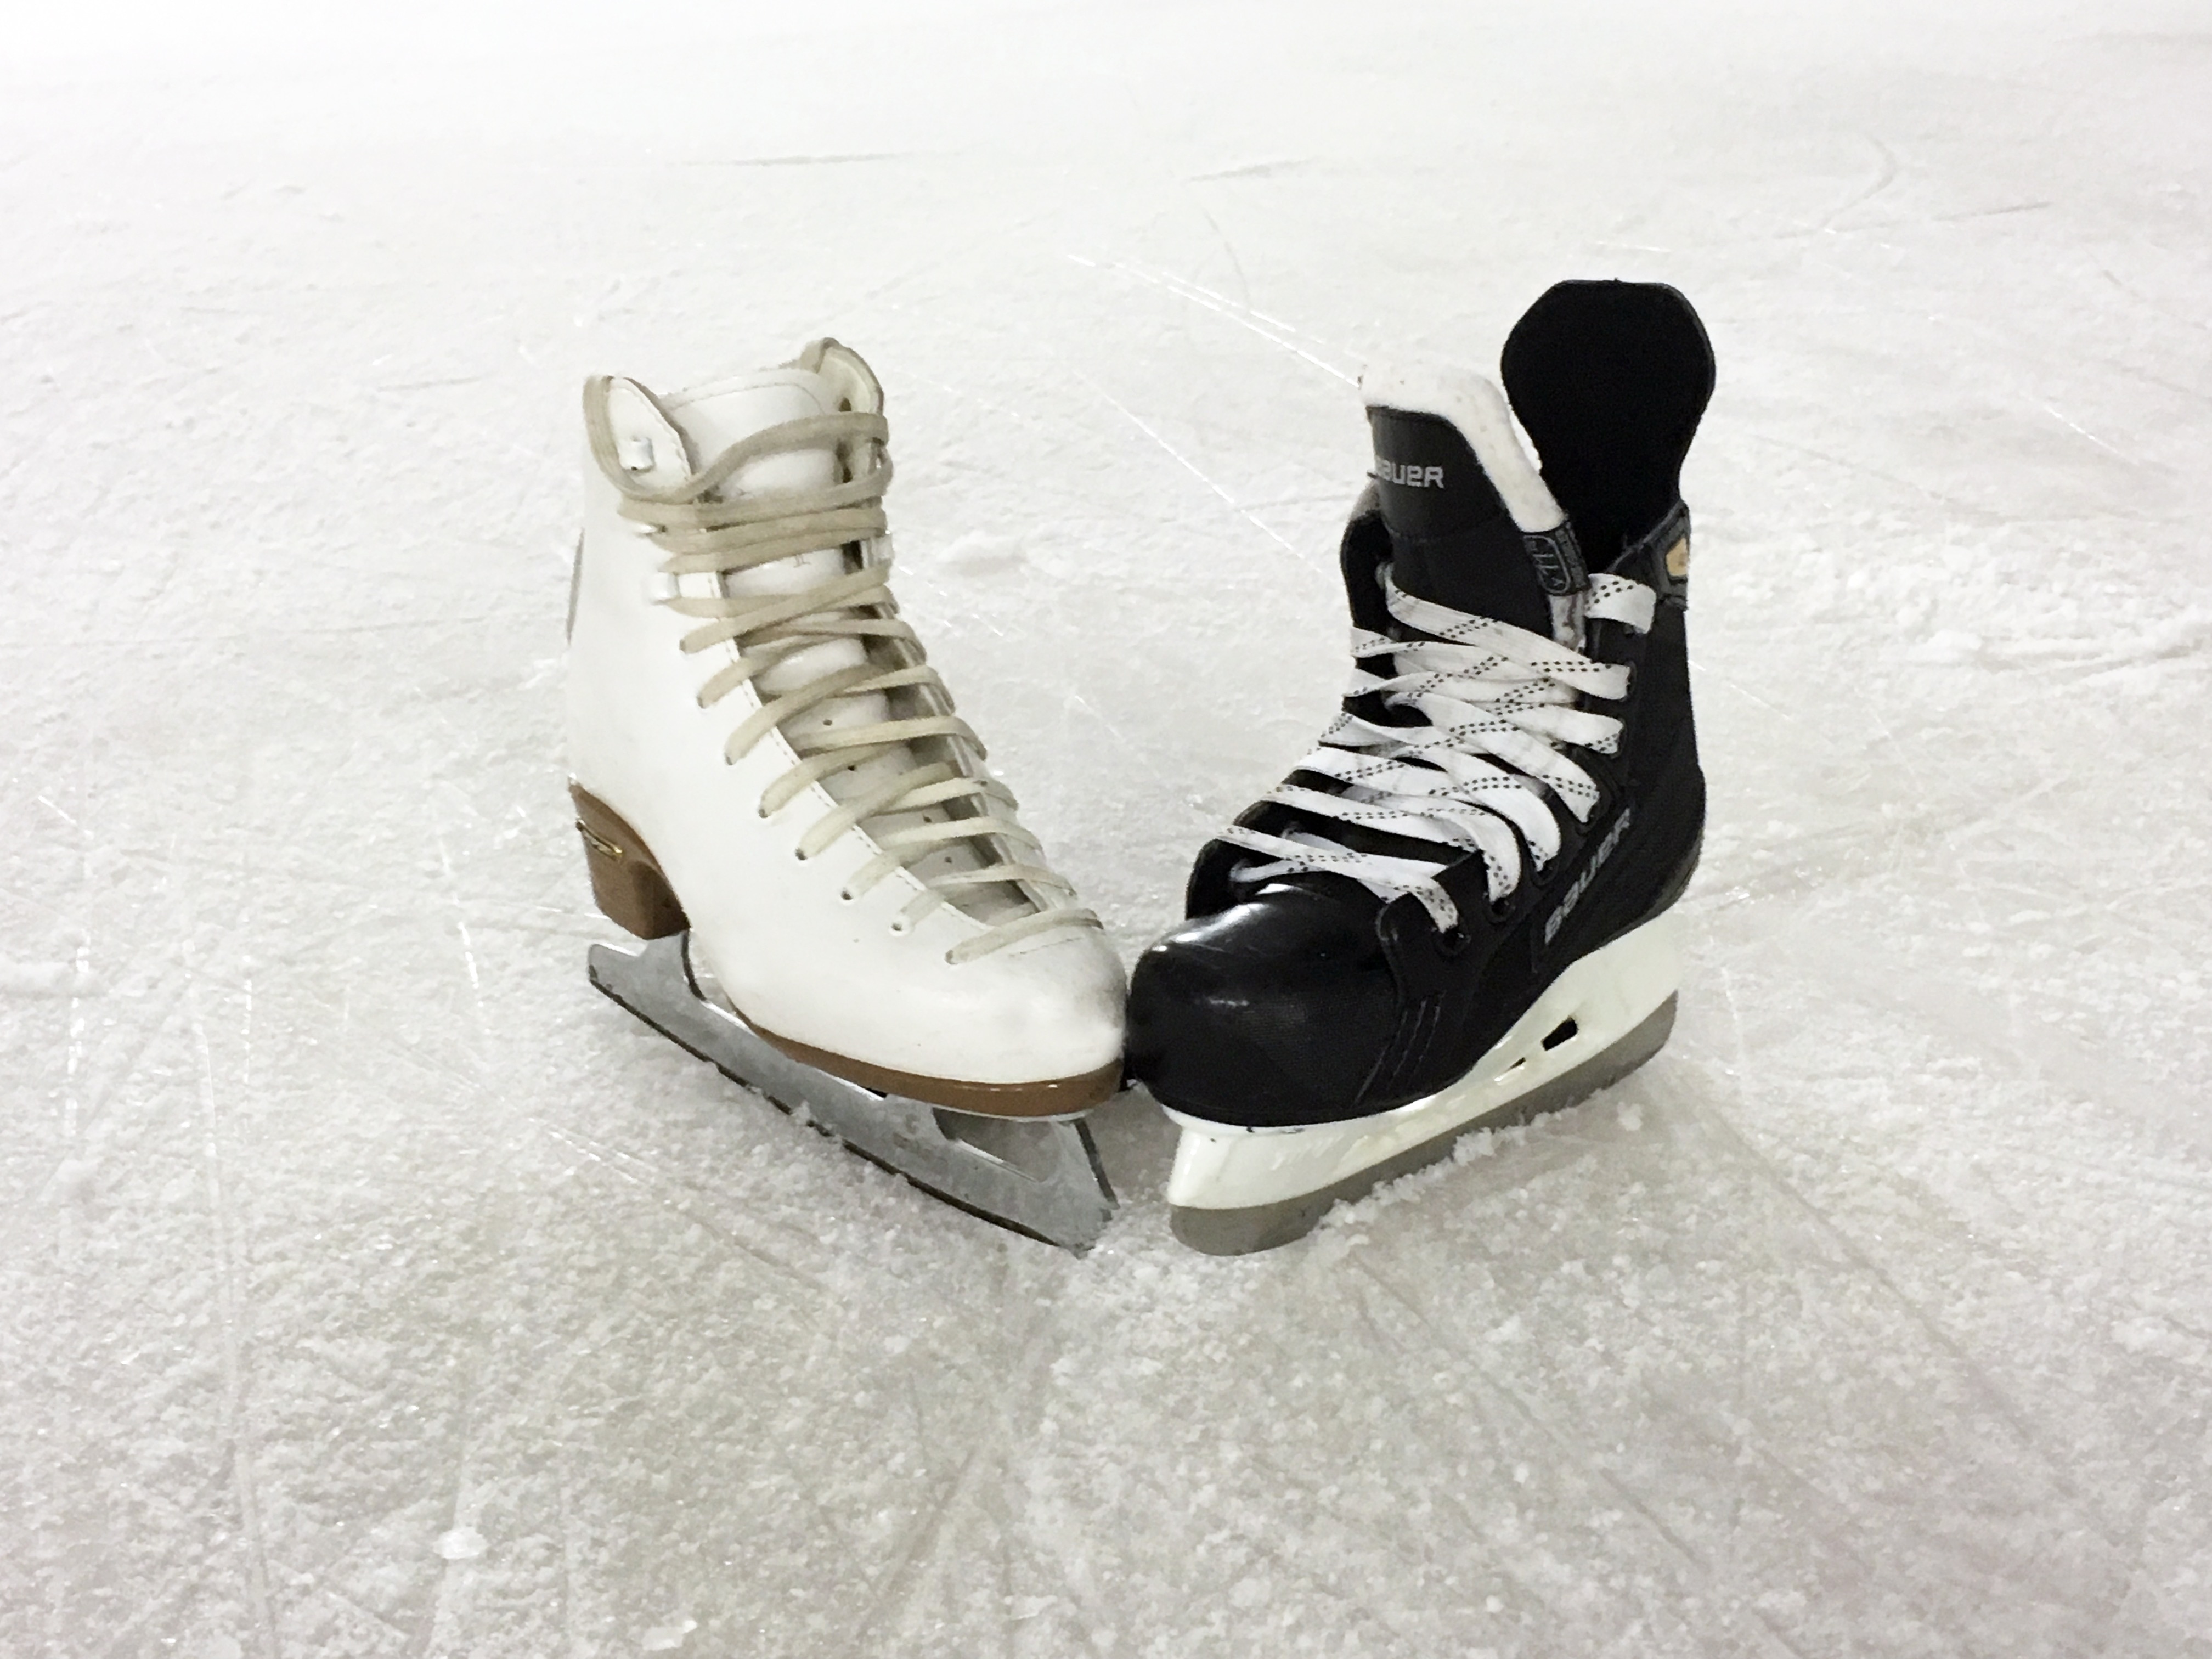 white and black ice skates